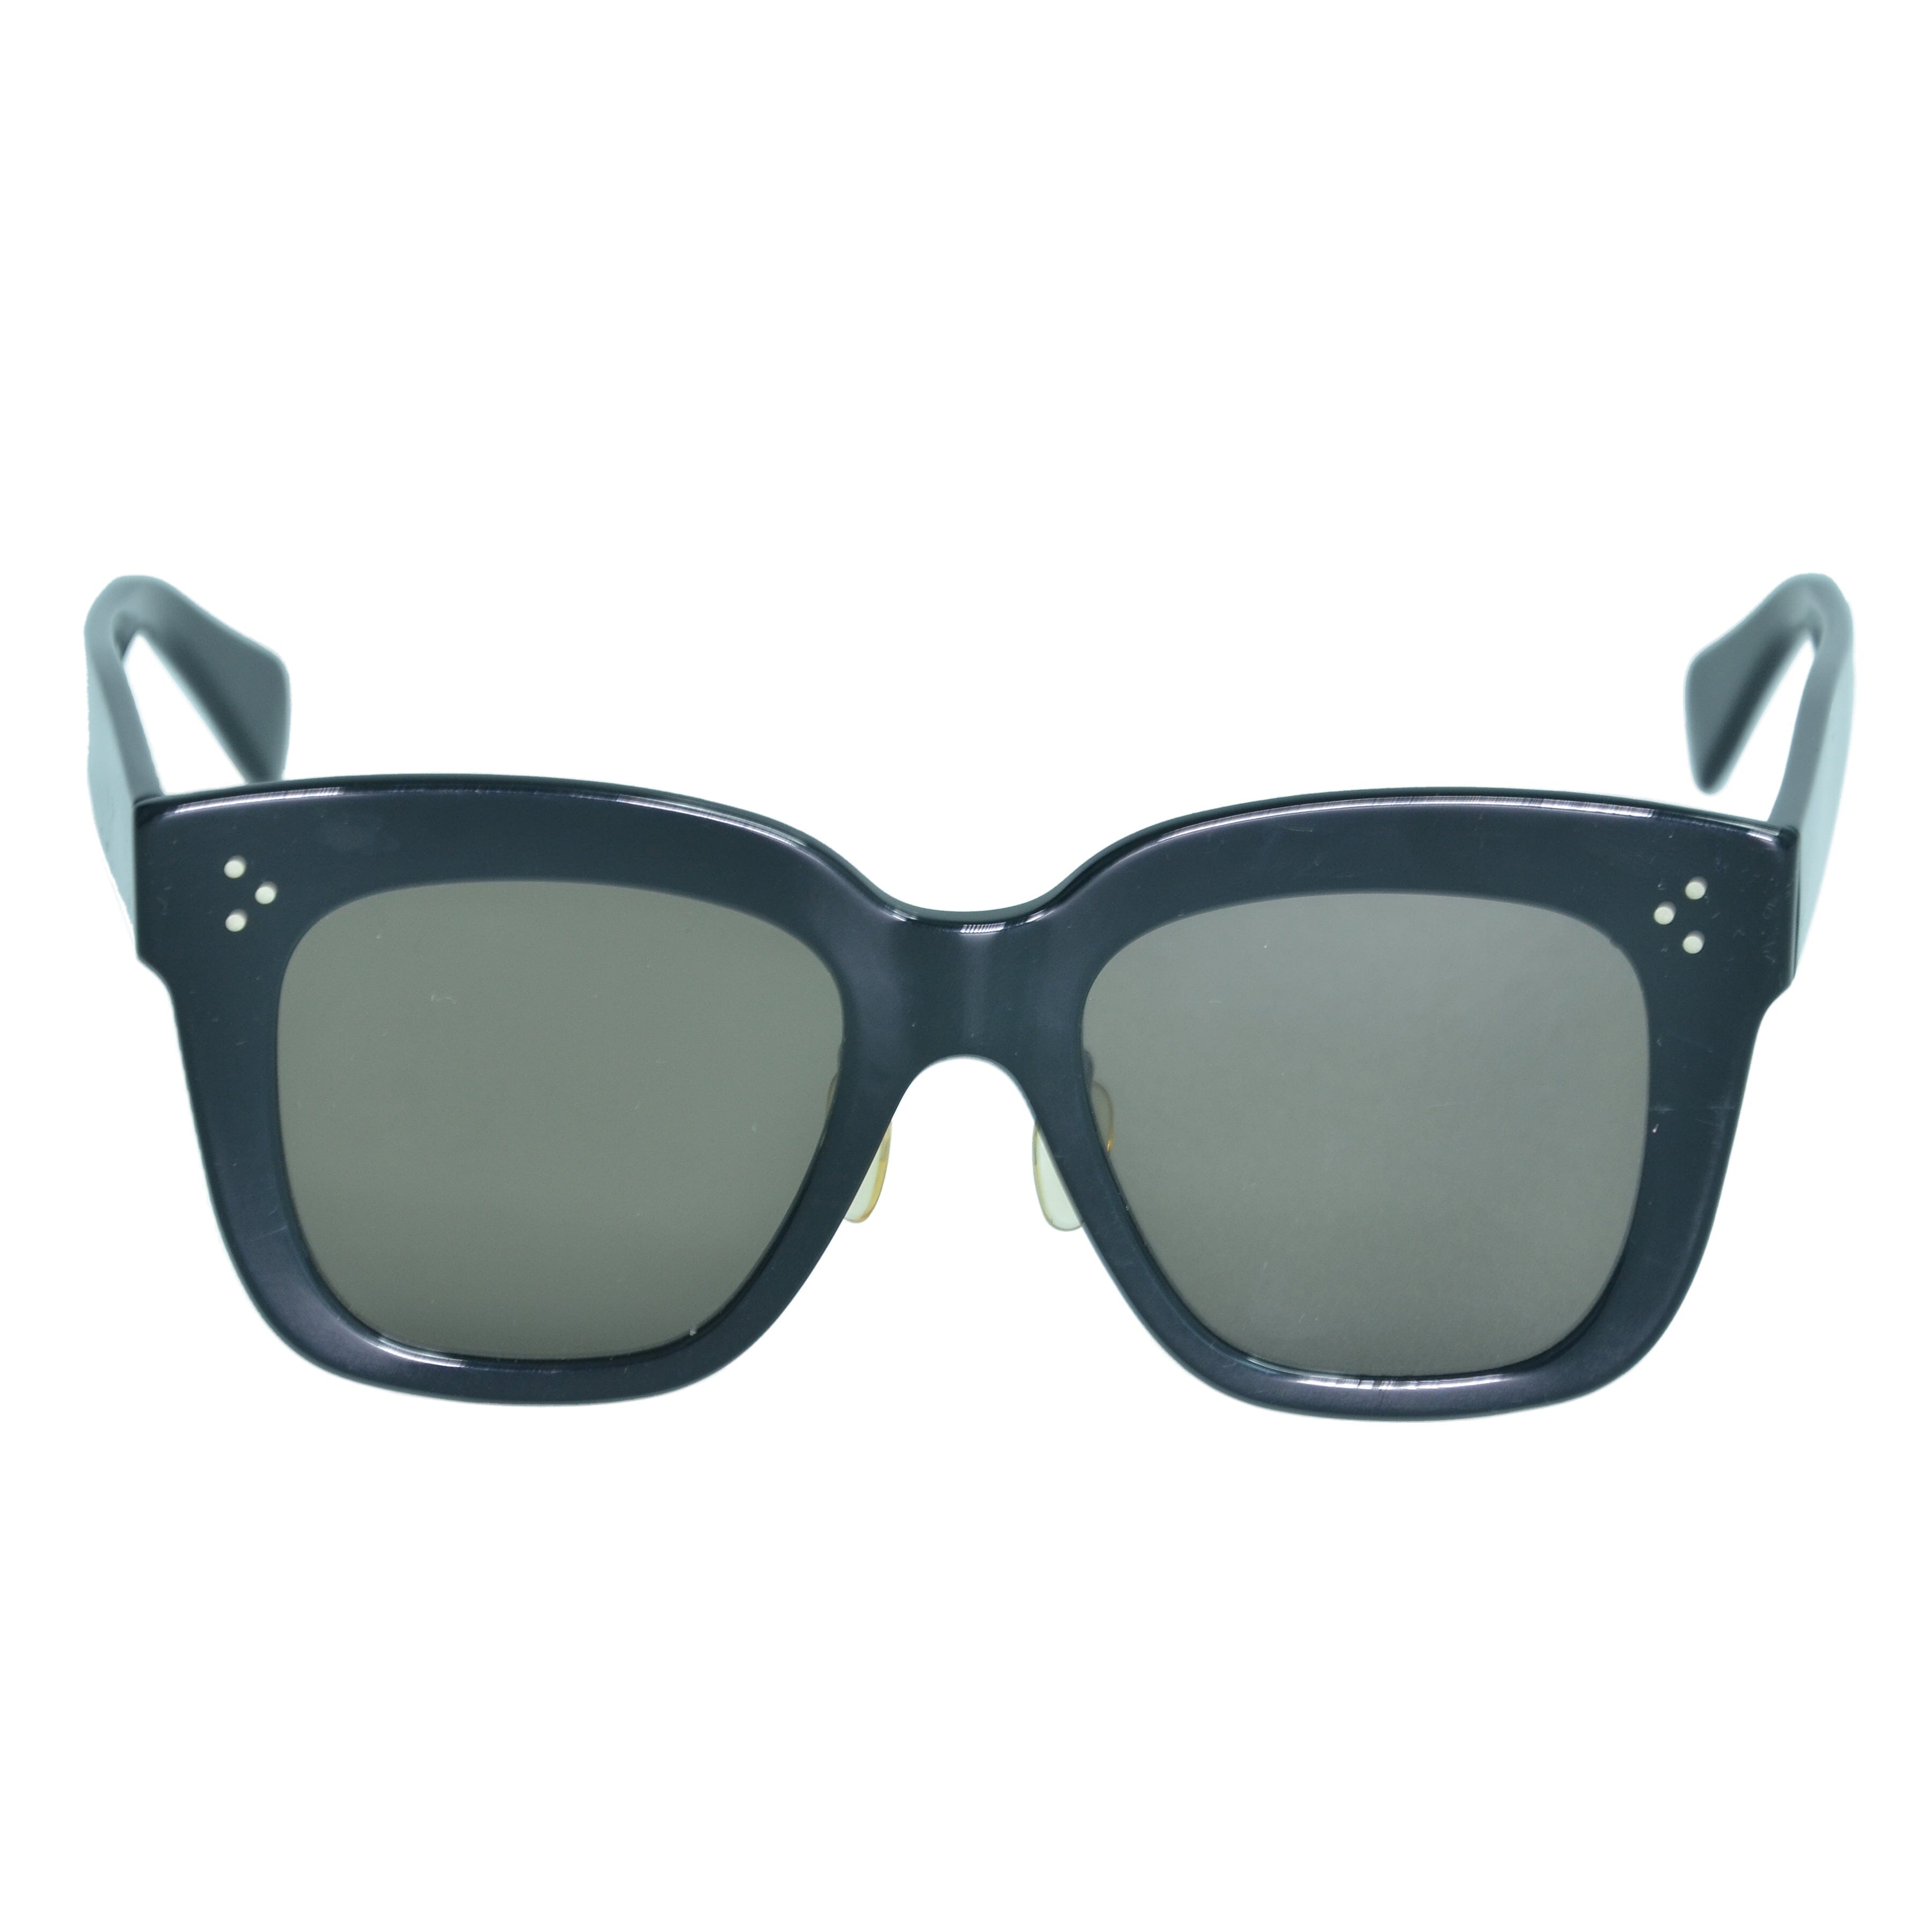 Black Over Sized Square Frame Sunglasses